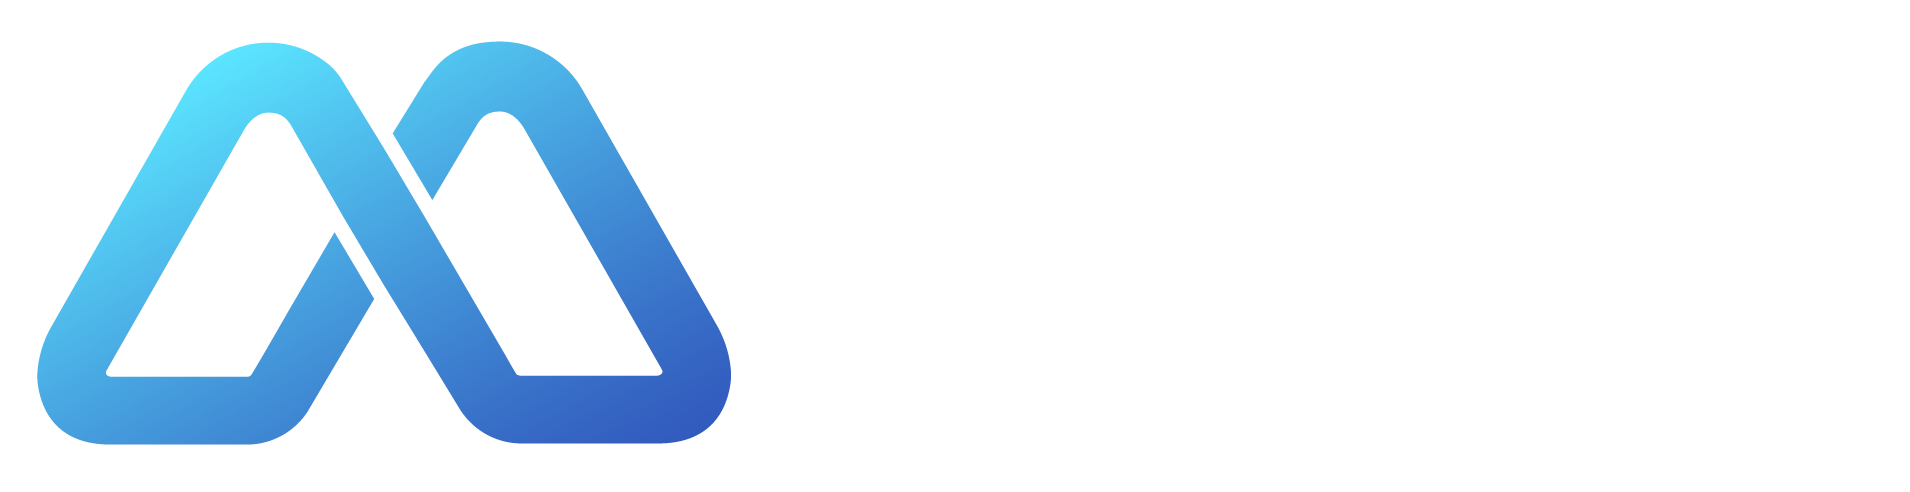 Team McFarland | South Surrey, White Rock Real Estate